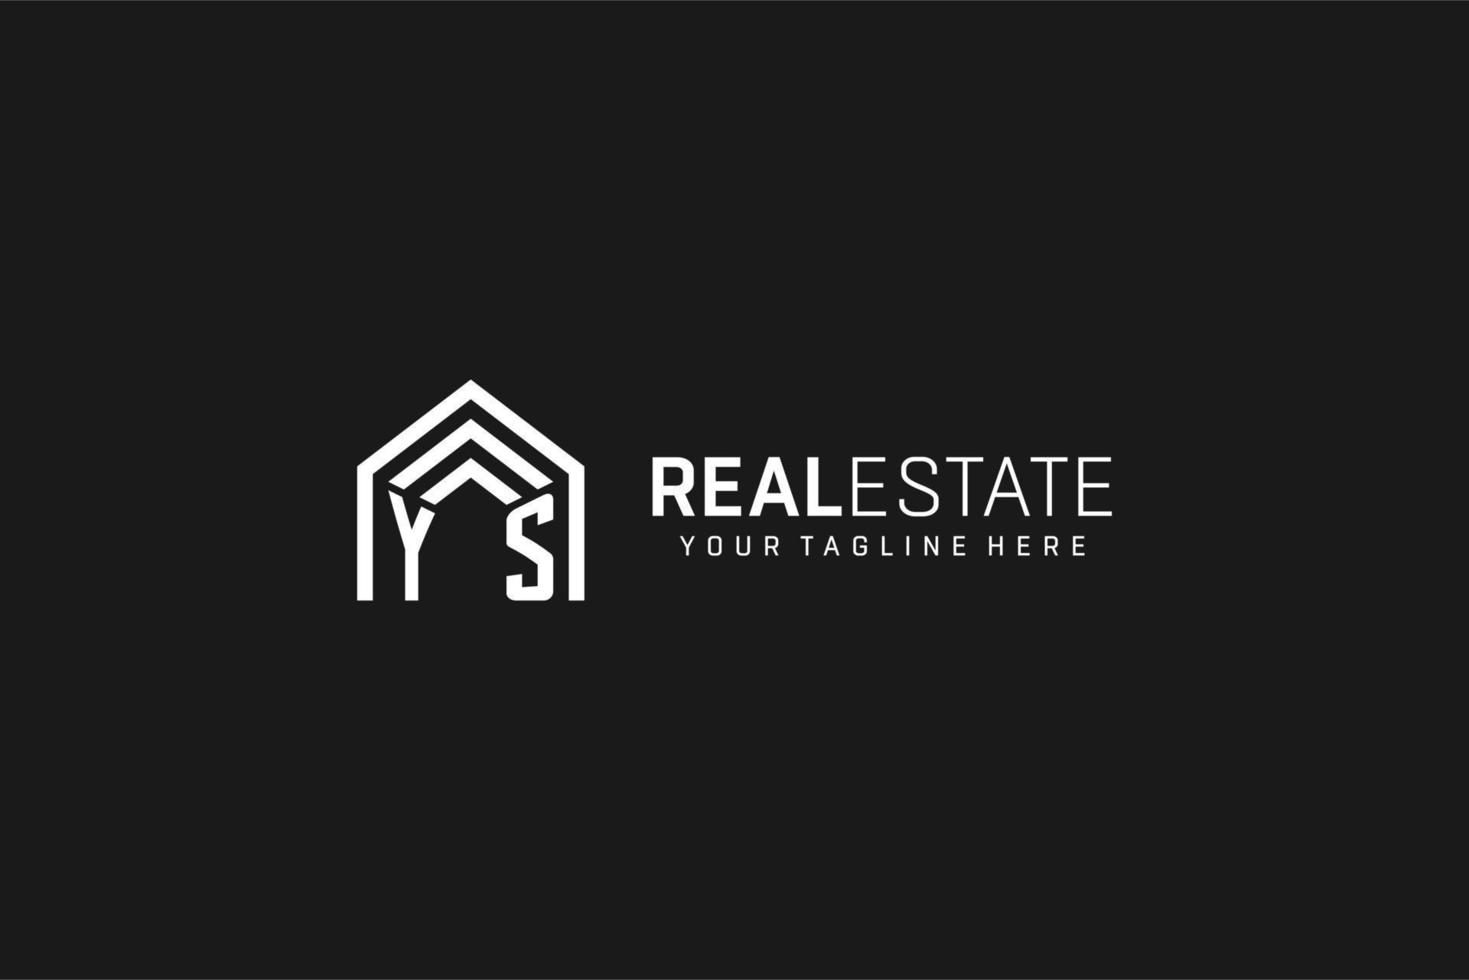 Letter YS house roof shape logo, creative real estate monogram logo style vector